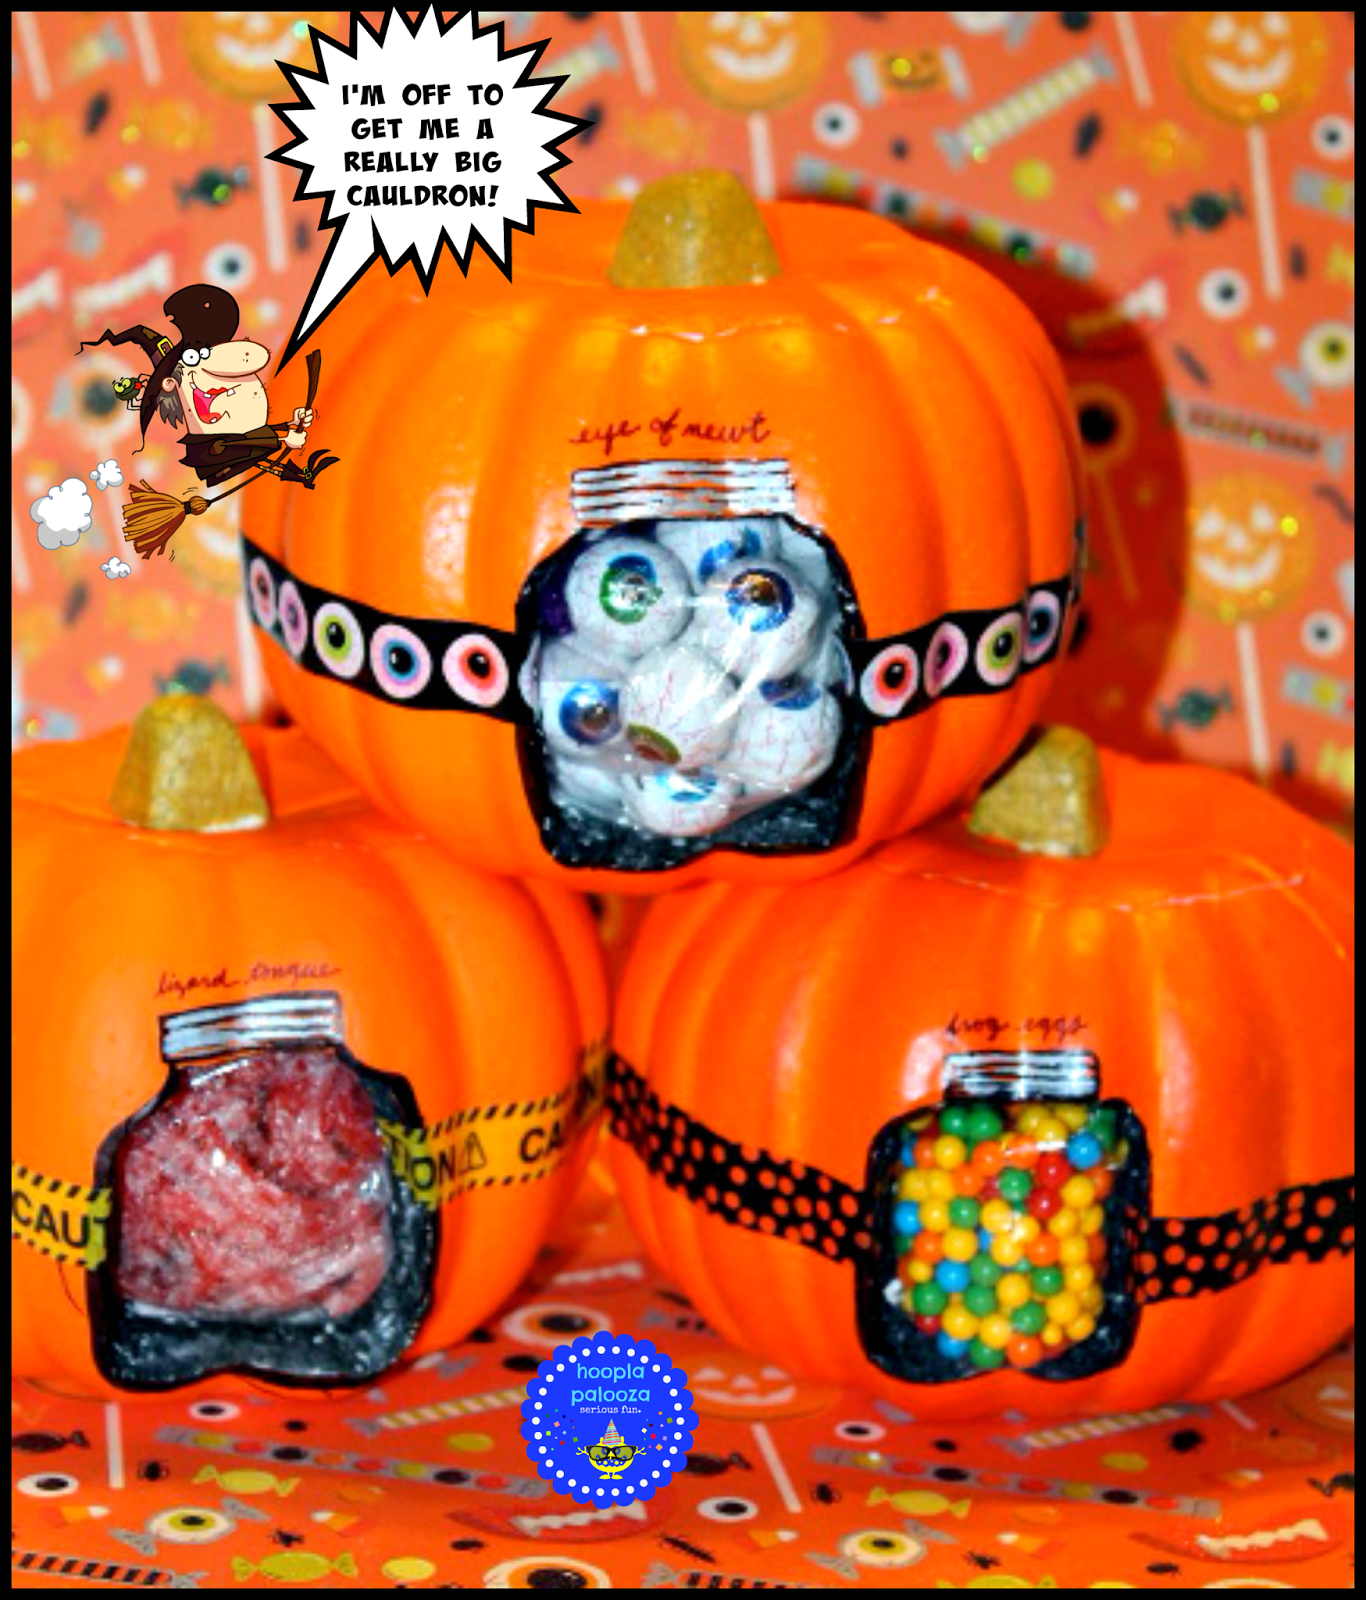 hoopla palooza: witch's brew ingredient mason jar pumpkins